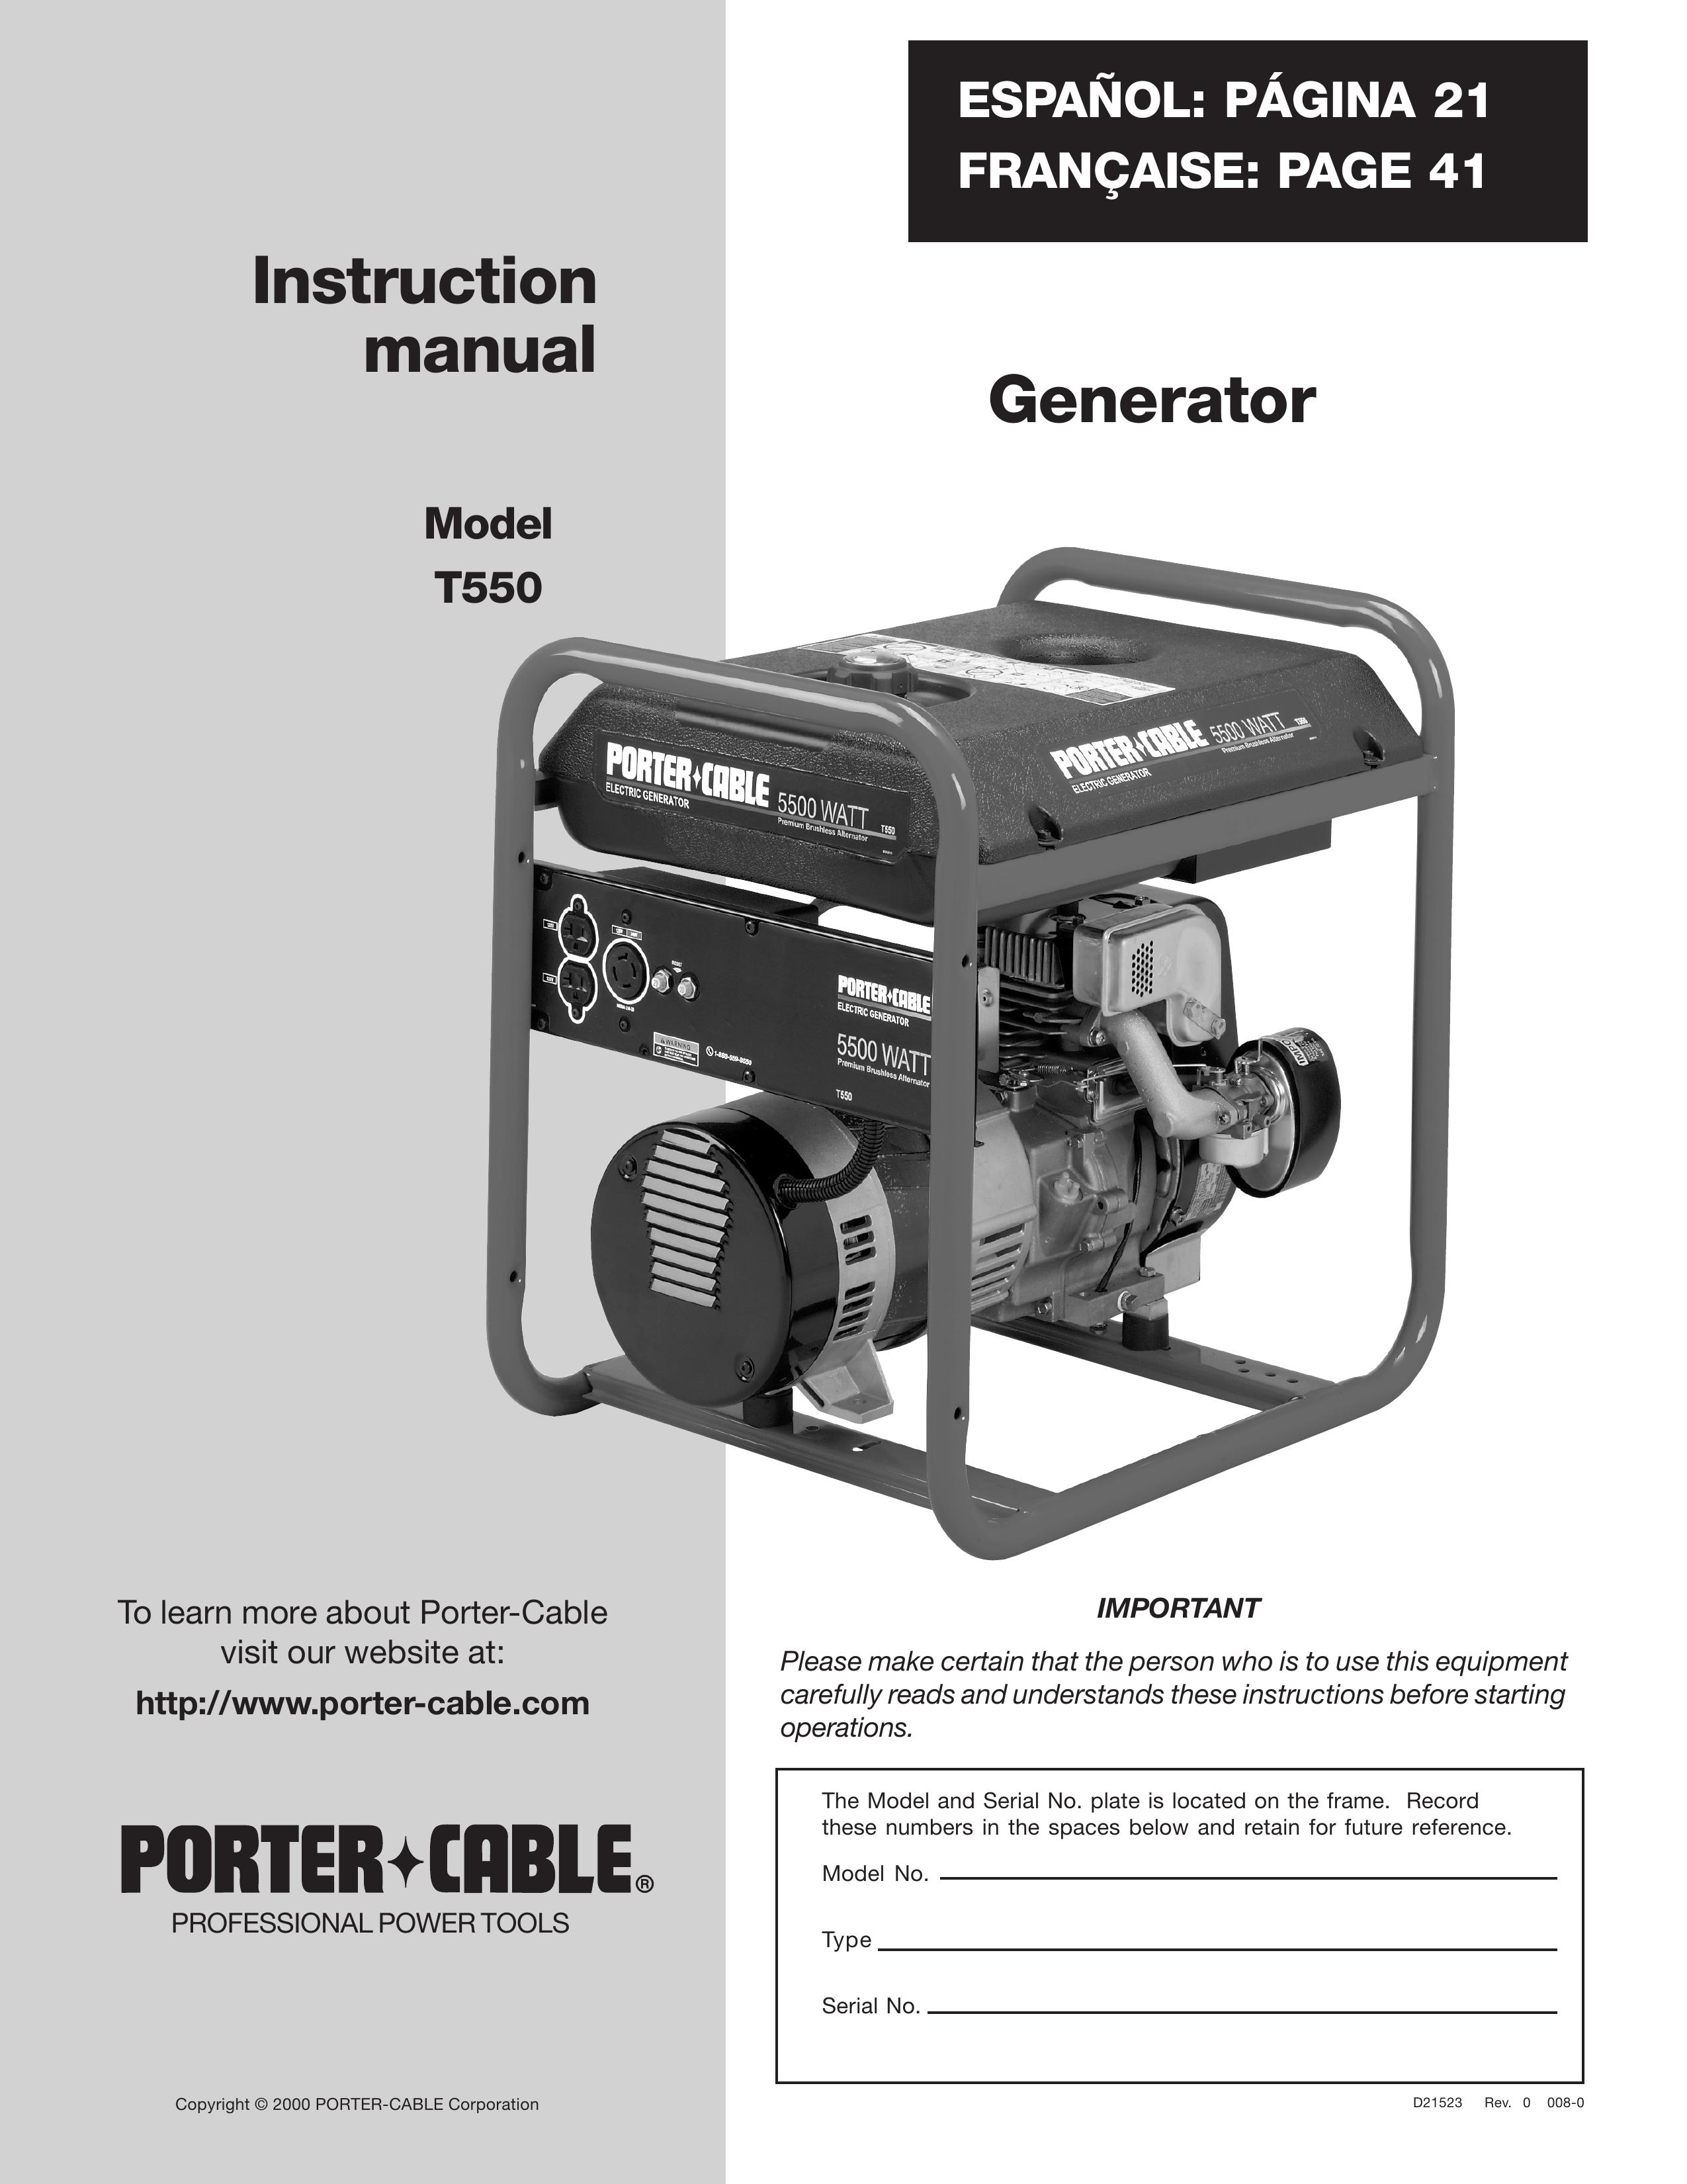 Porter-Cable T550 Portable Generator User Manual